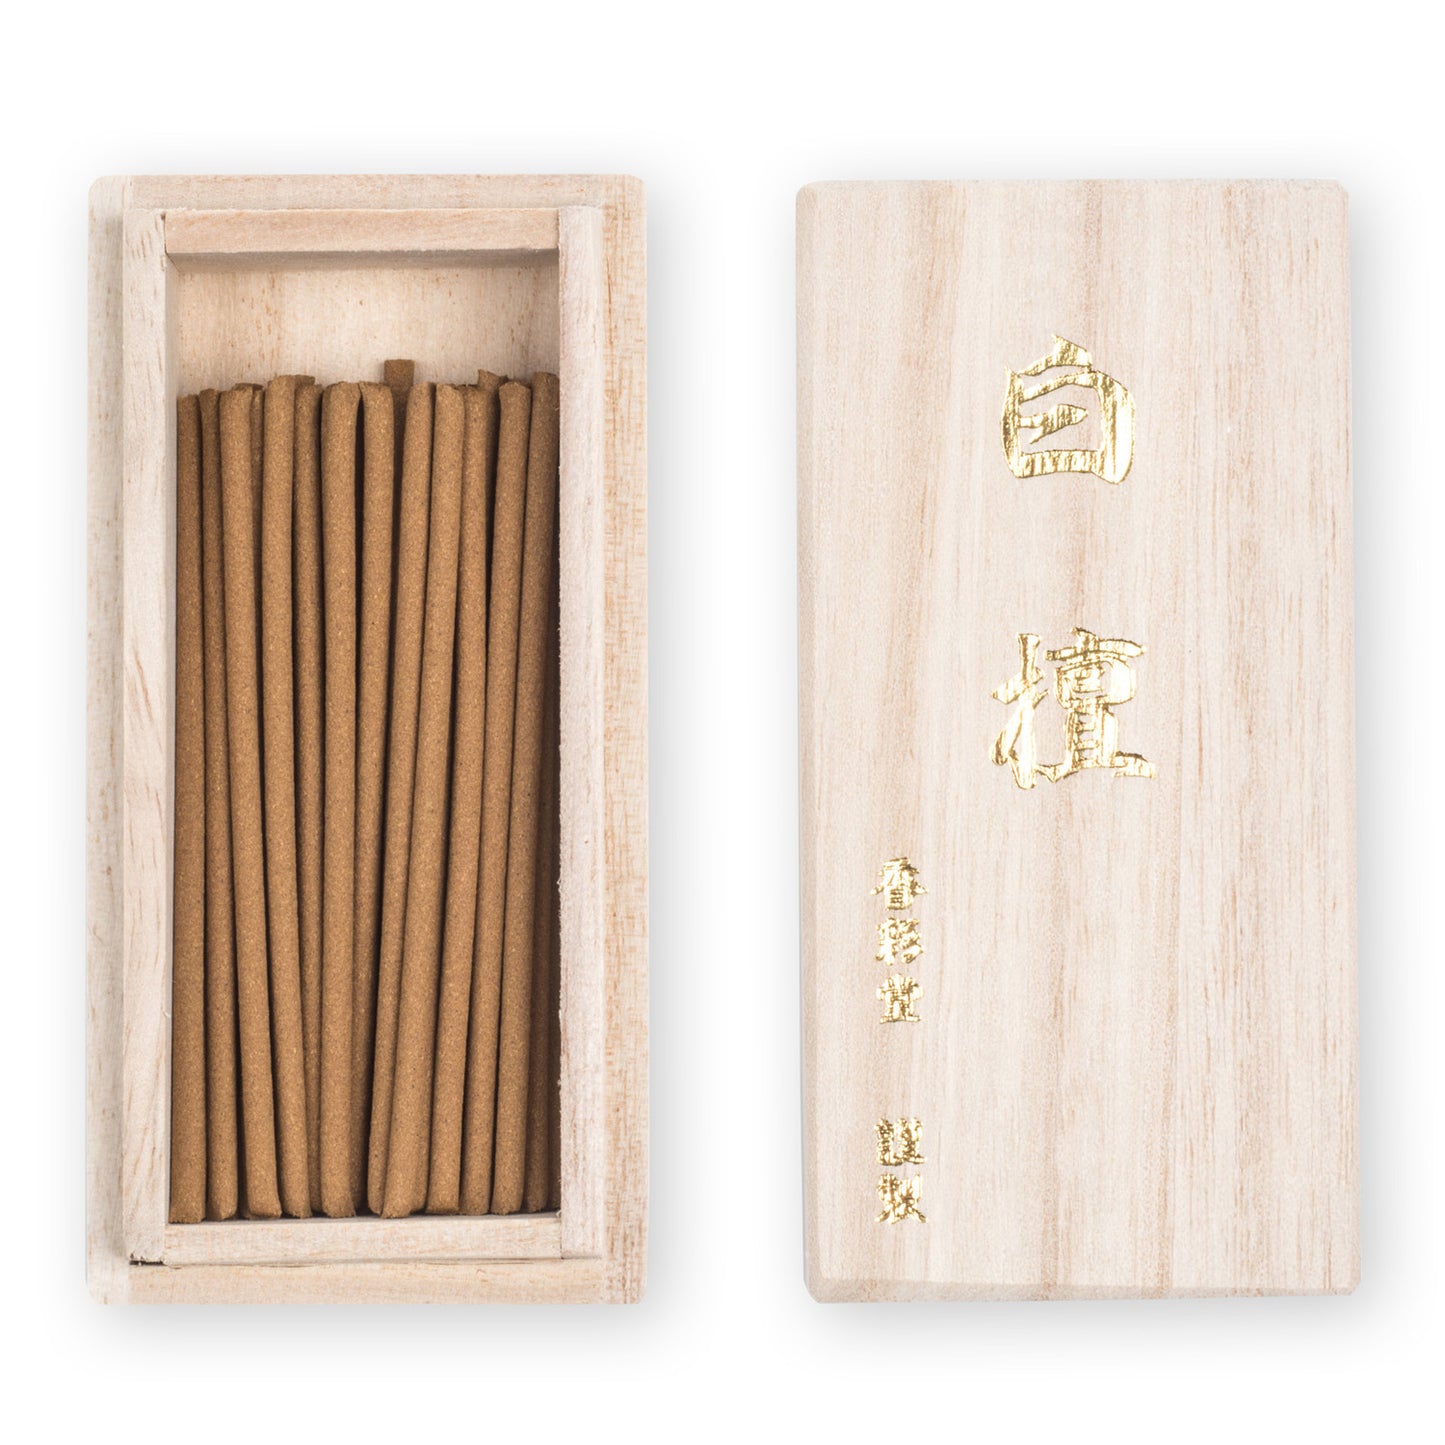 Sandalwood Premium Japanese Incense